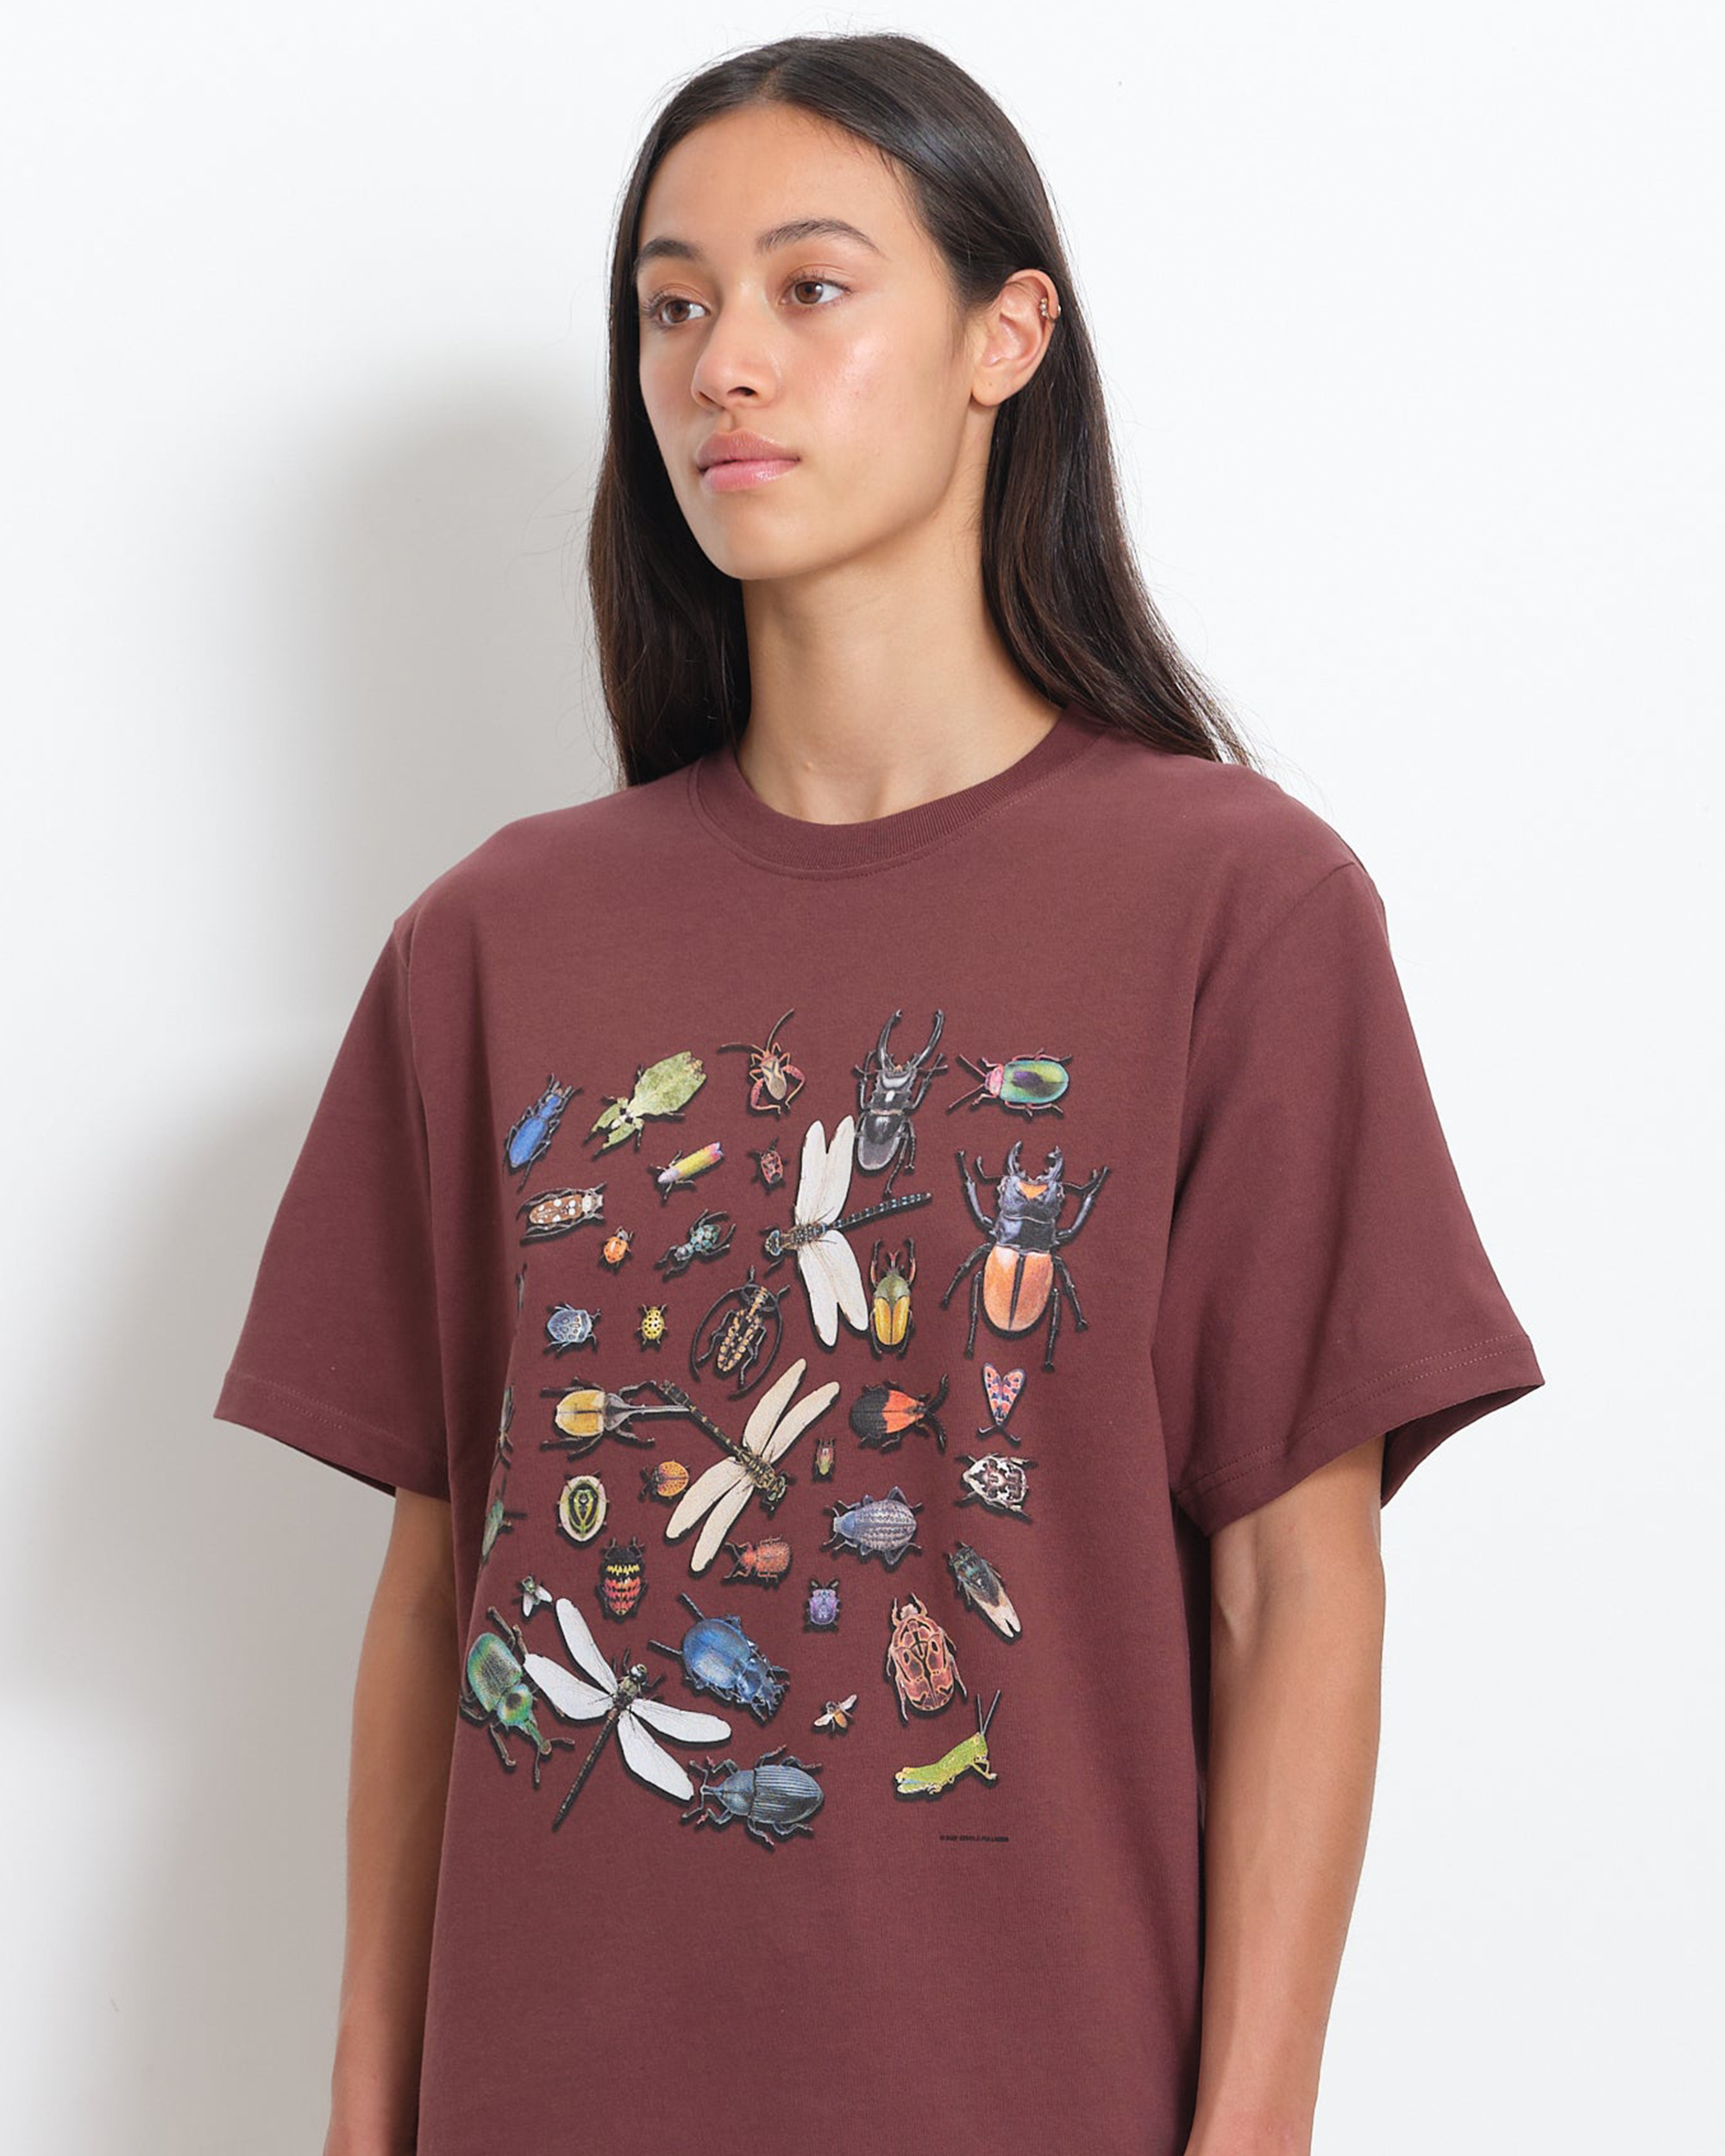 Bugs SS T-shirt - Chocolate